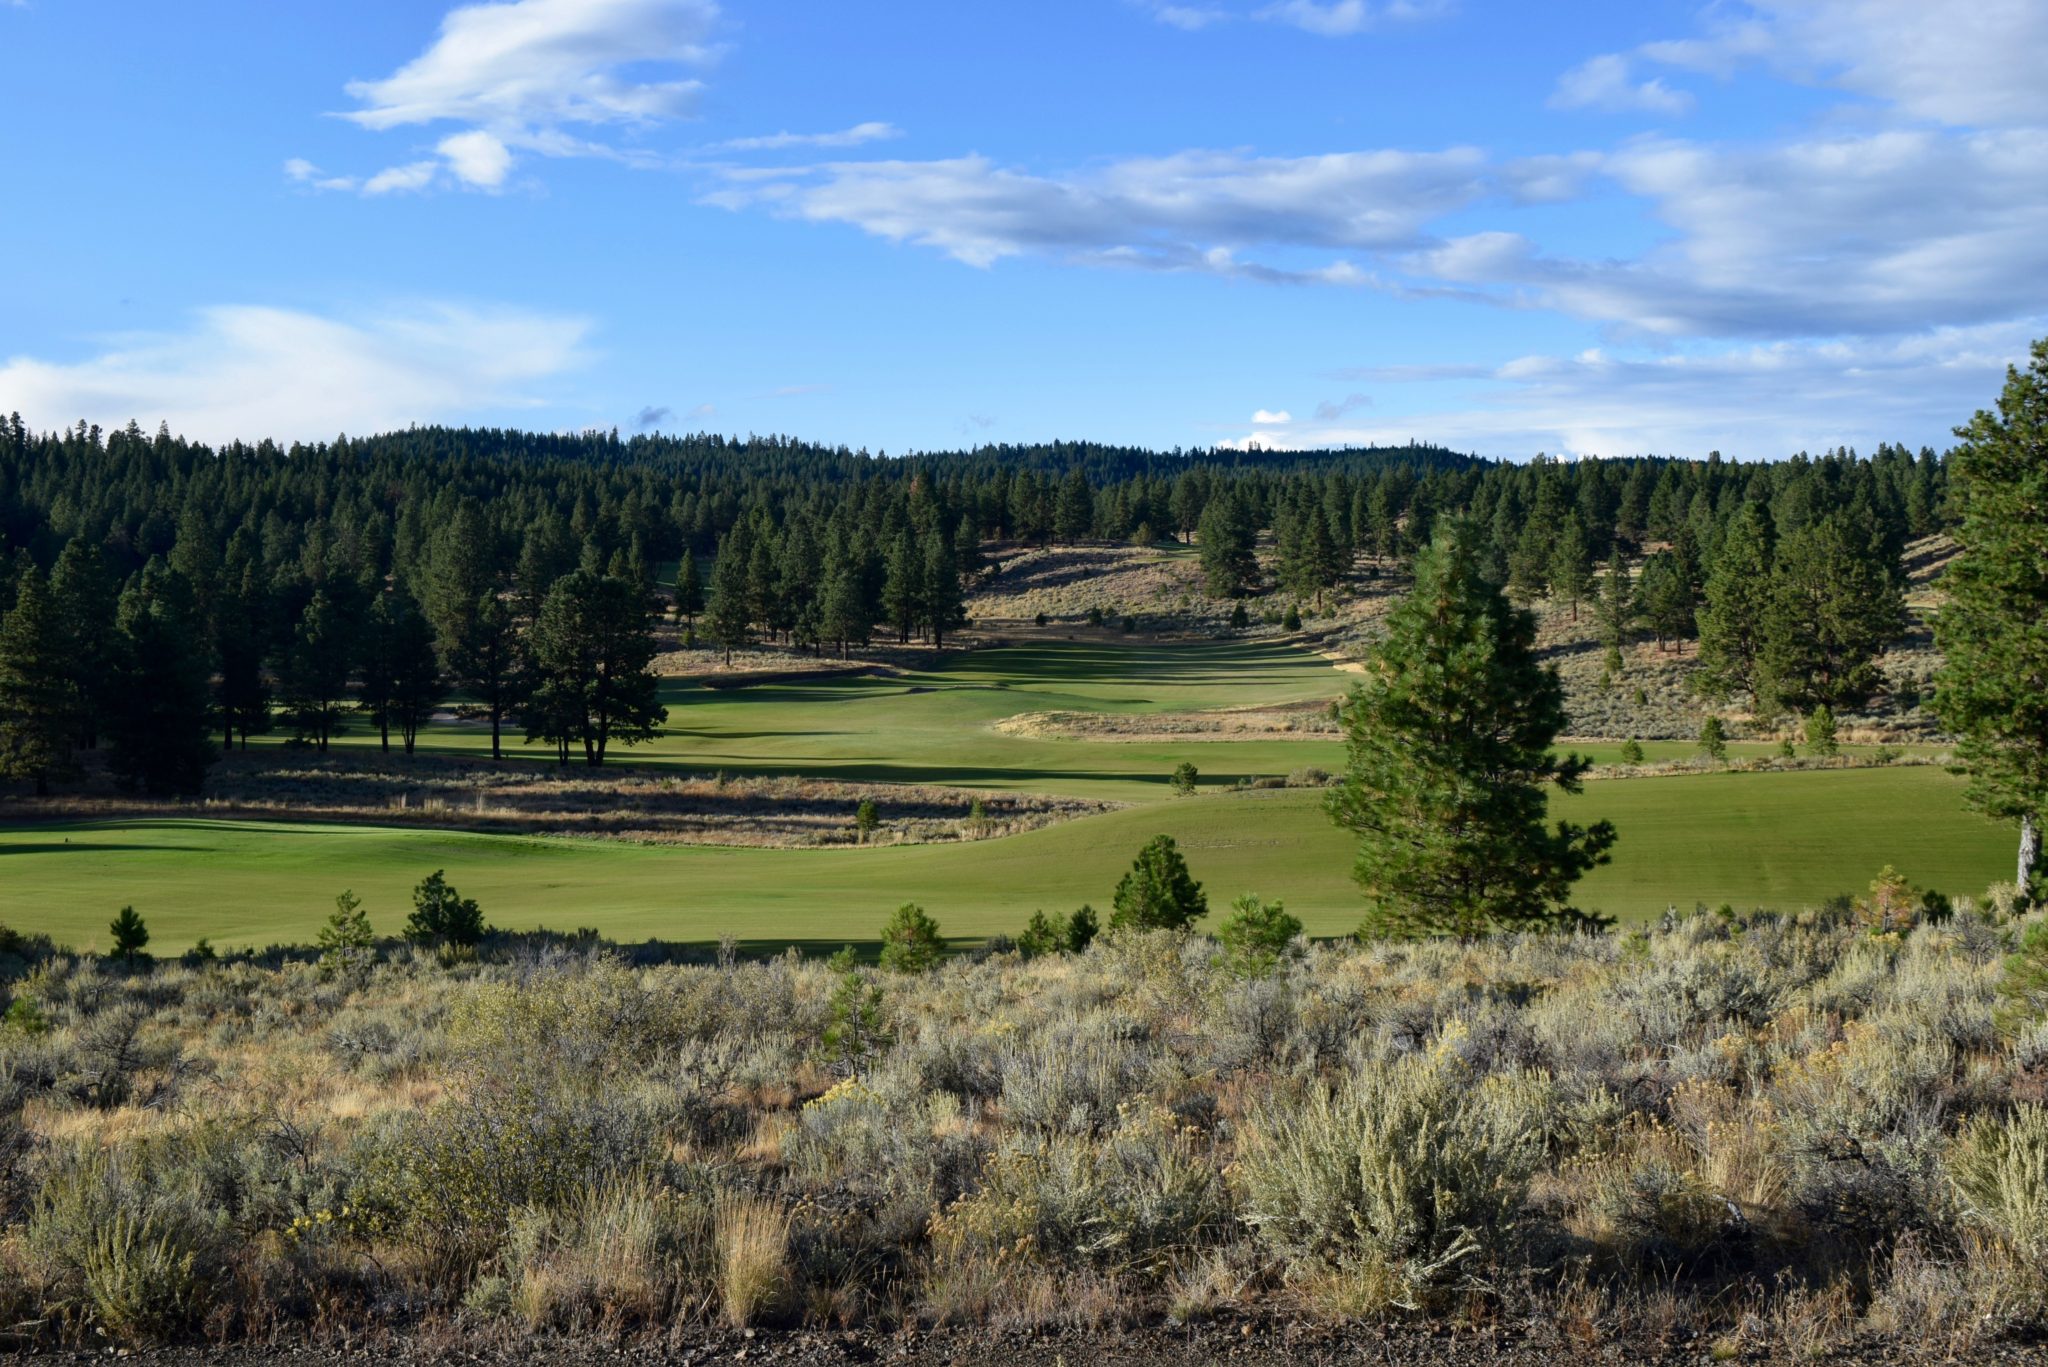 Silvies Valley Ranch: Dan Hixson’s courses in isolation